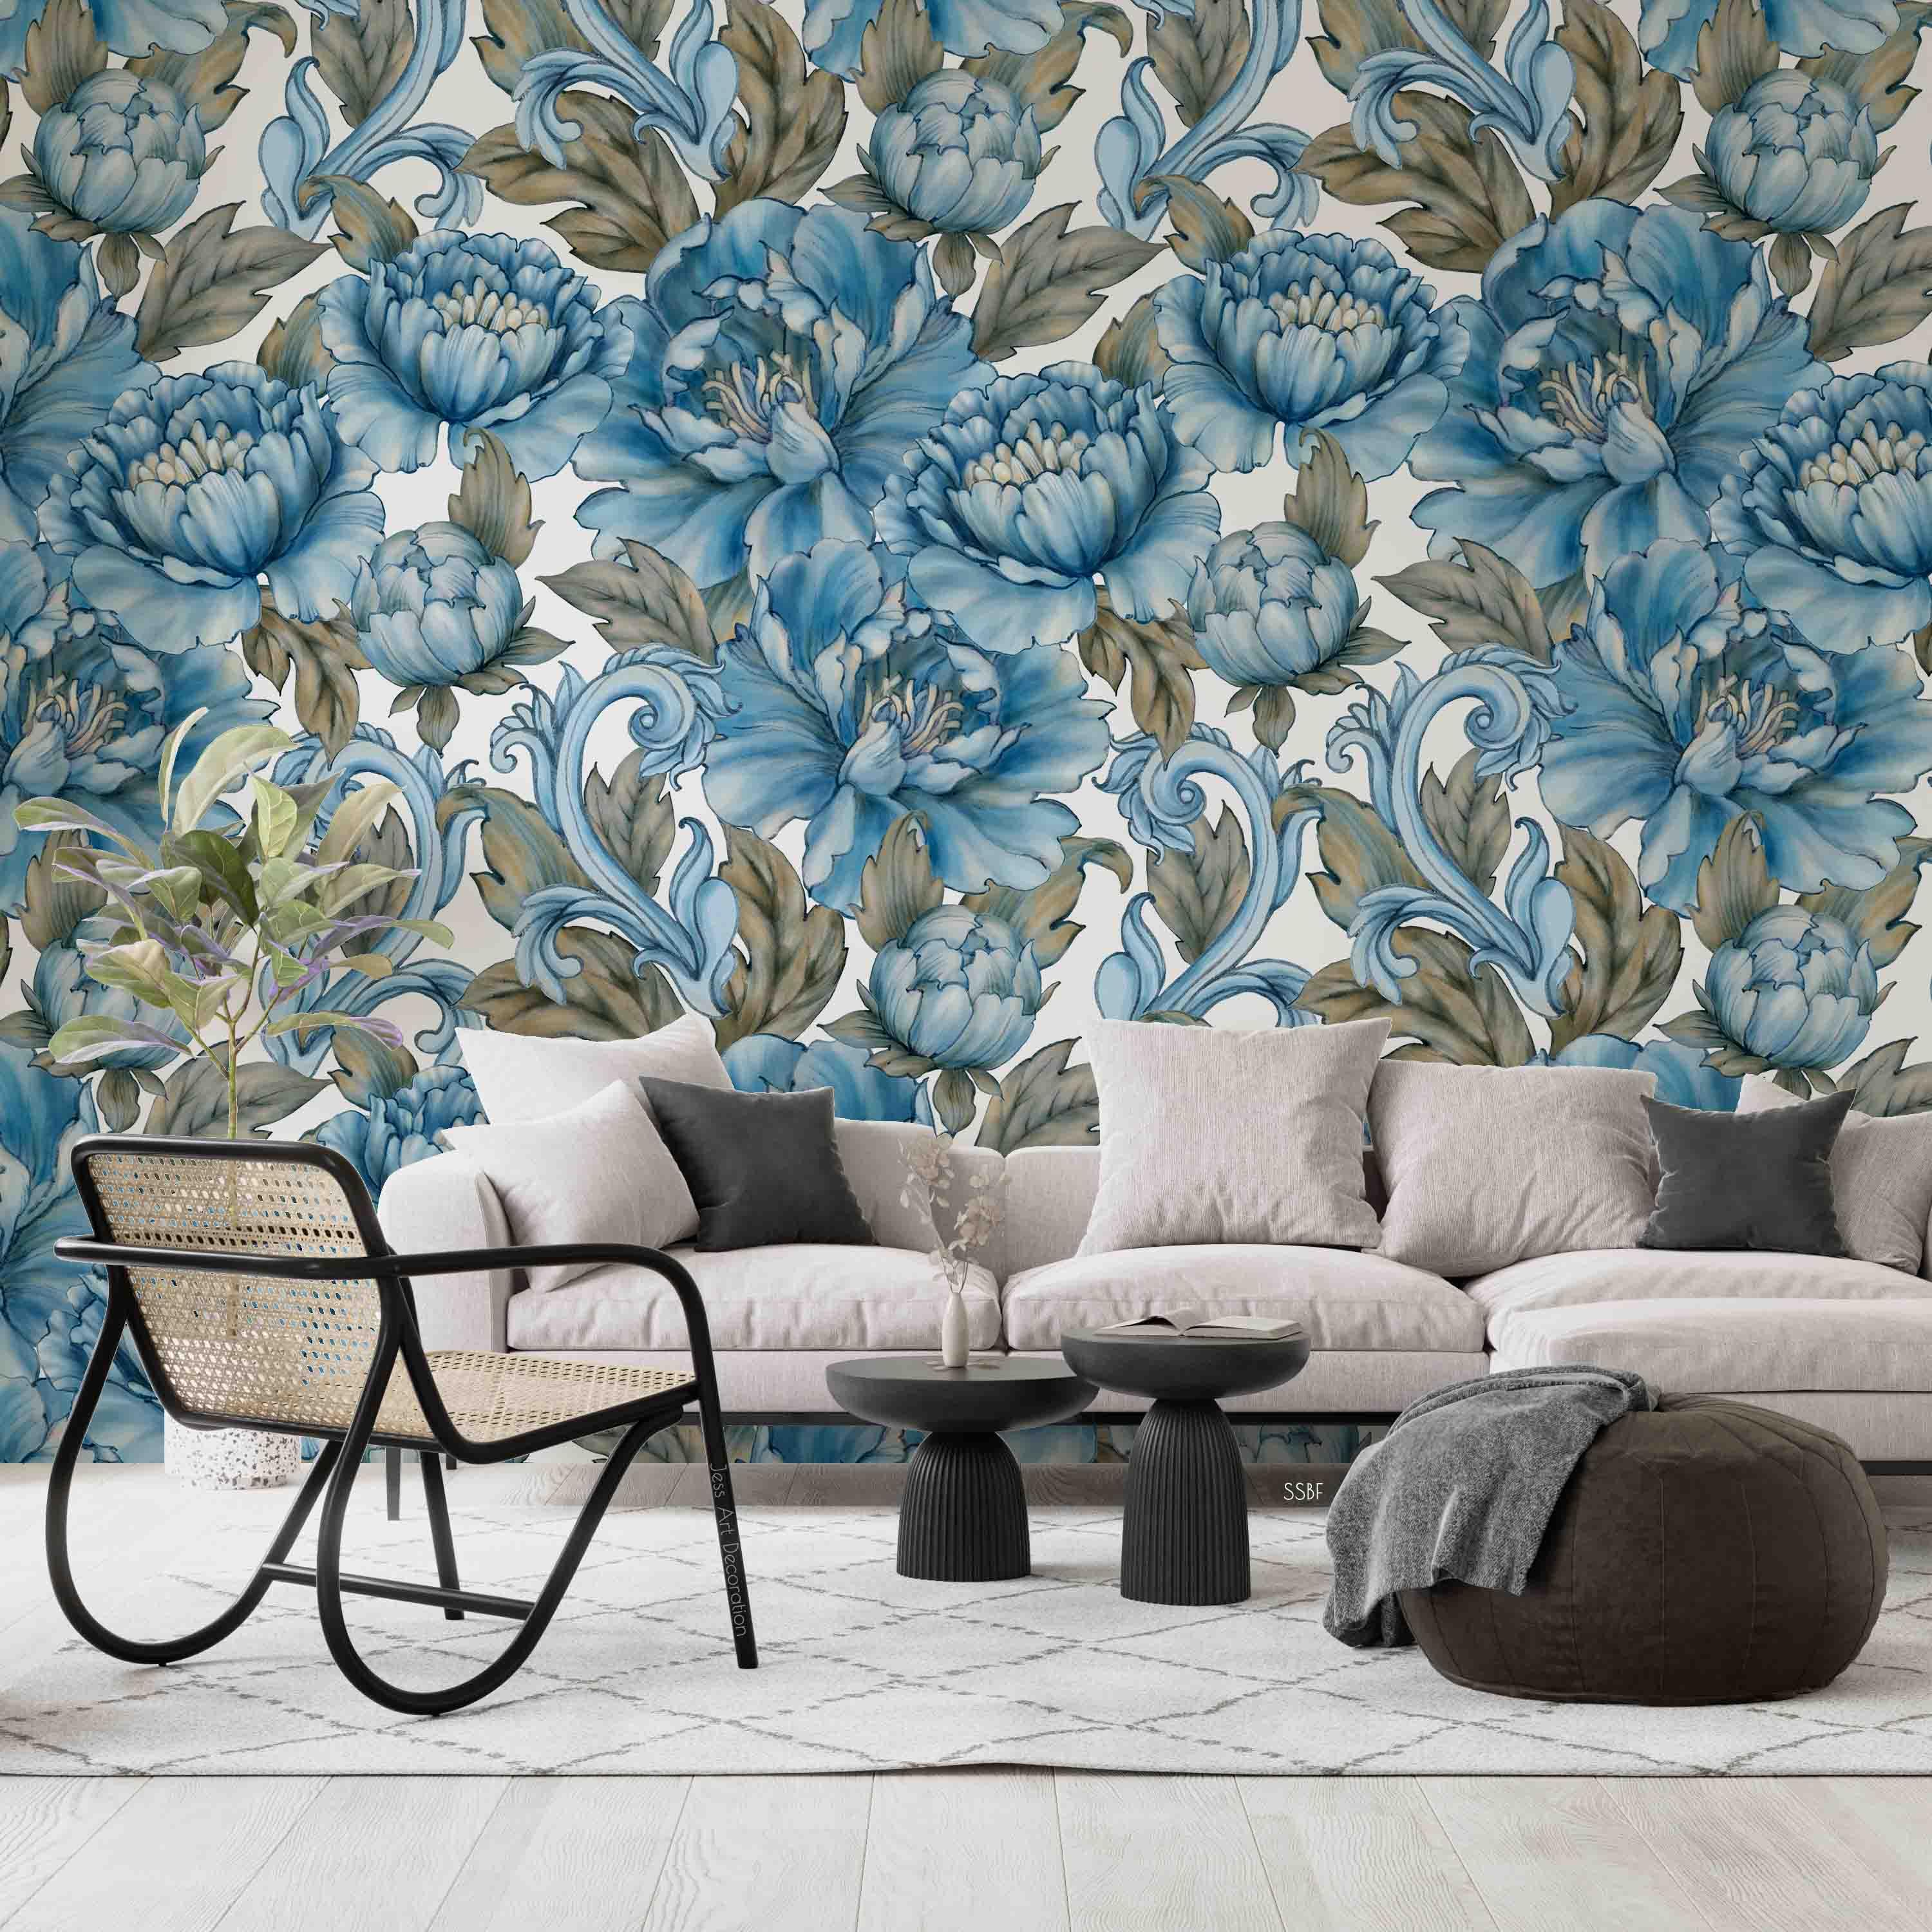 3D Vintage Blue Floral Background Pattern Wall Mural Wallpaper GD 3588- Jess Art Decoration